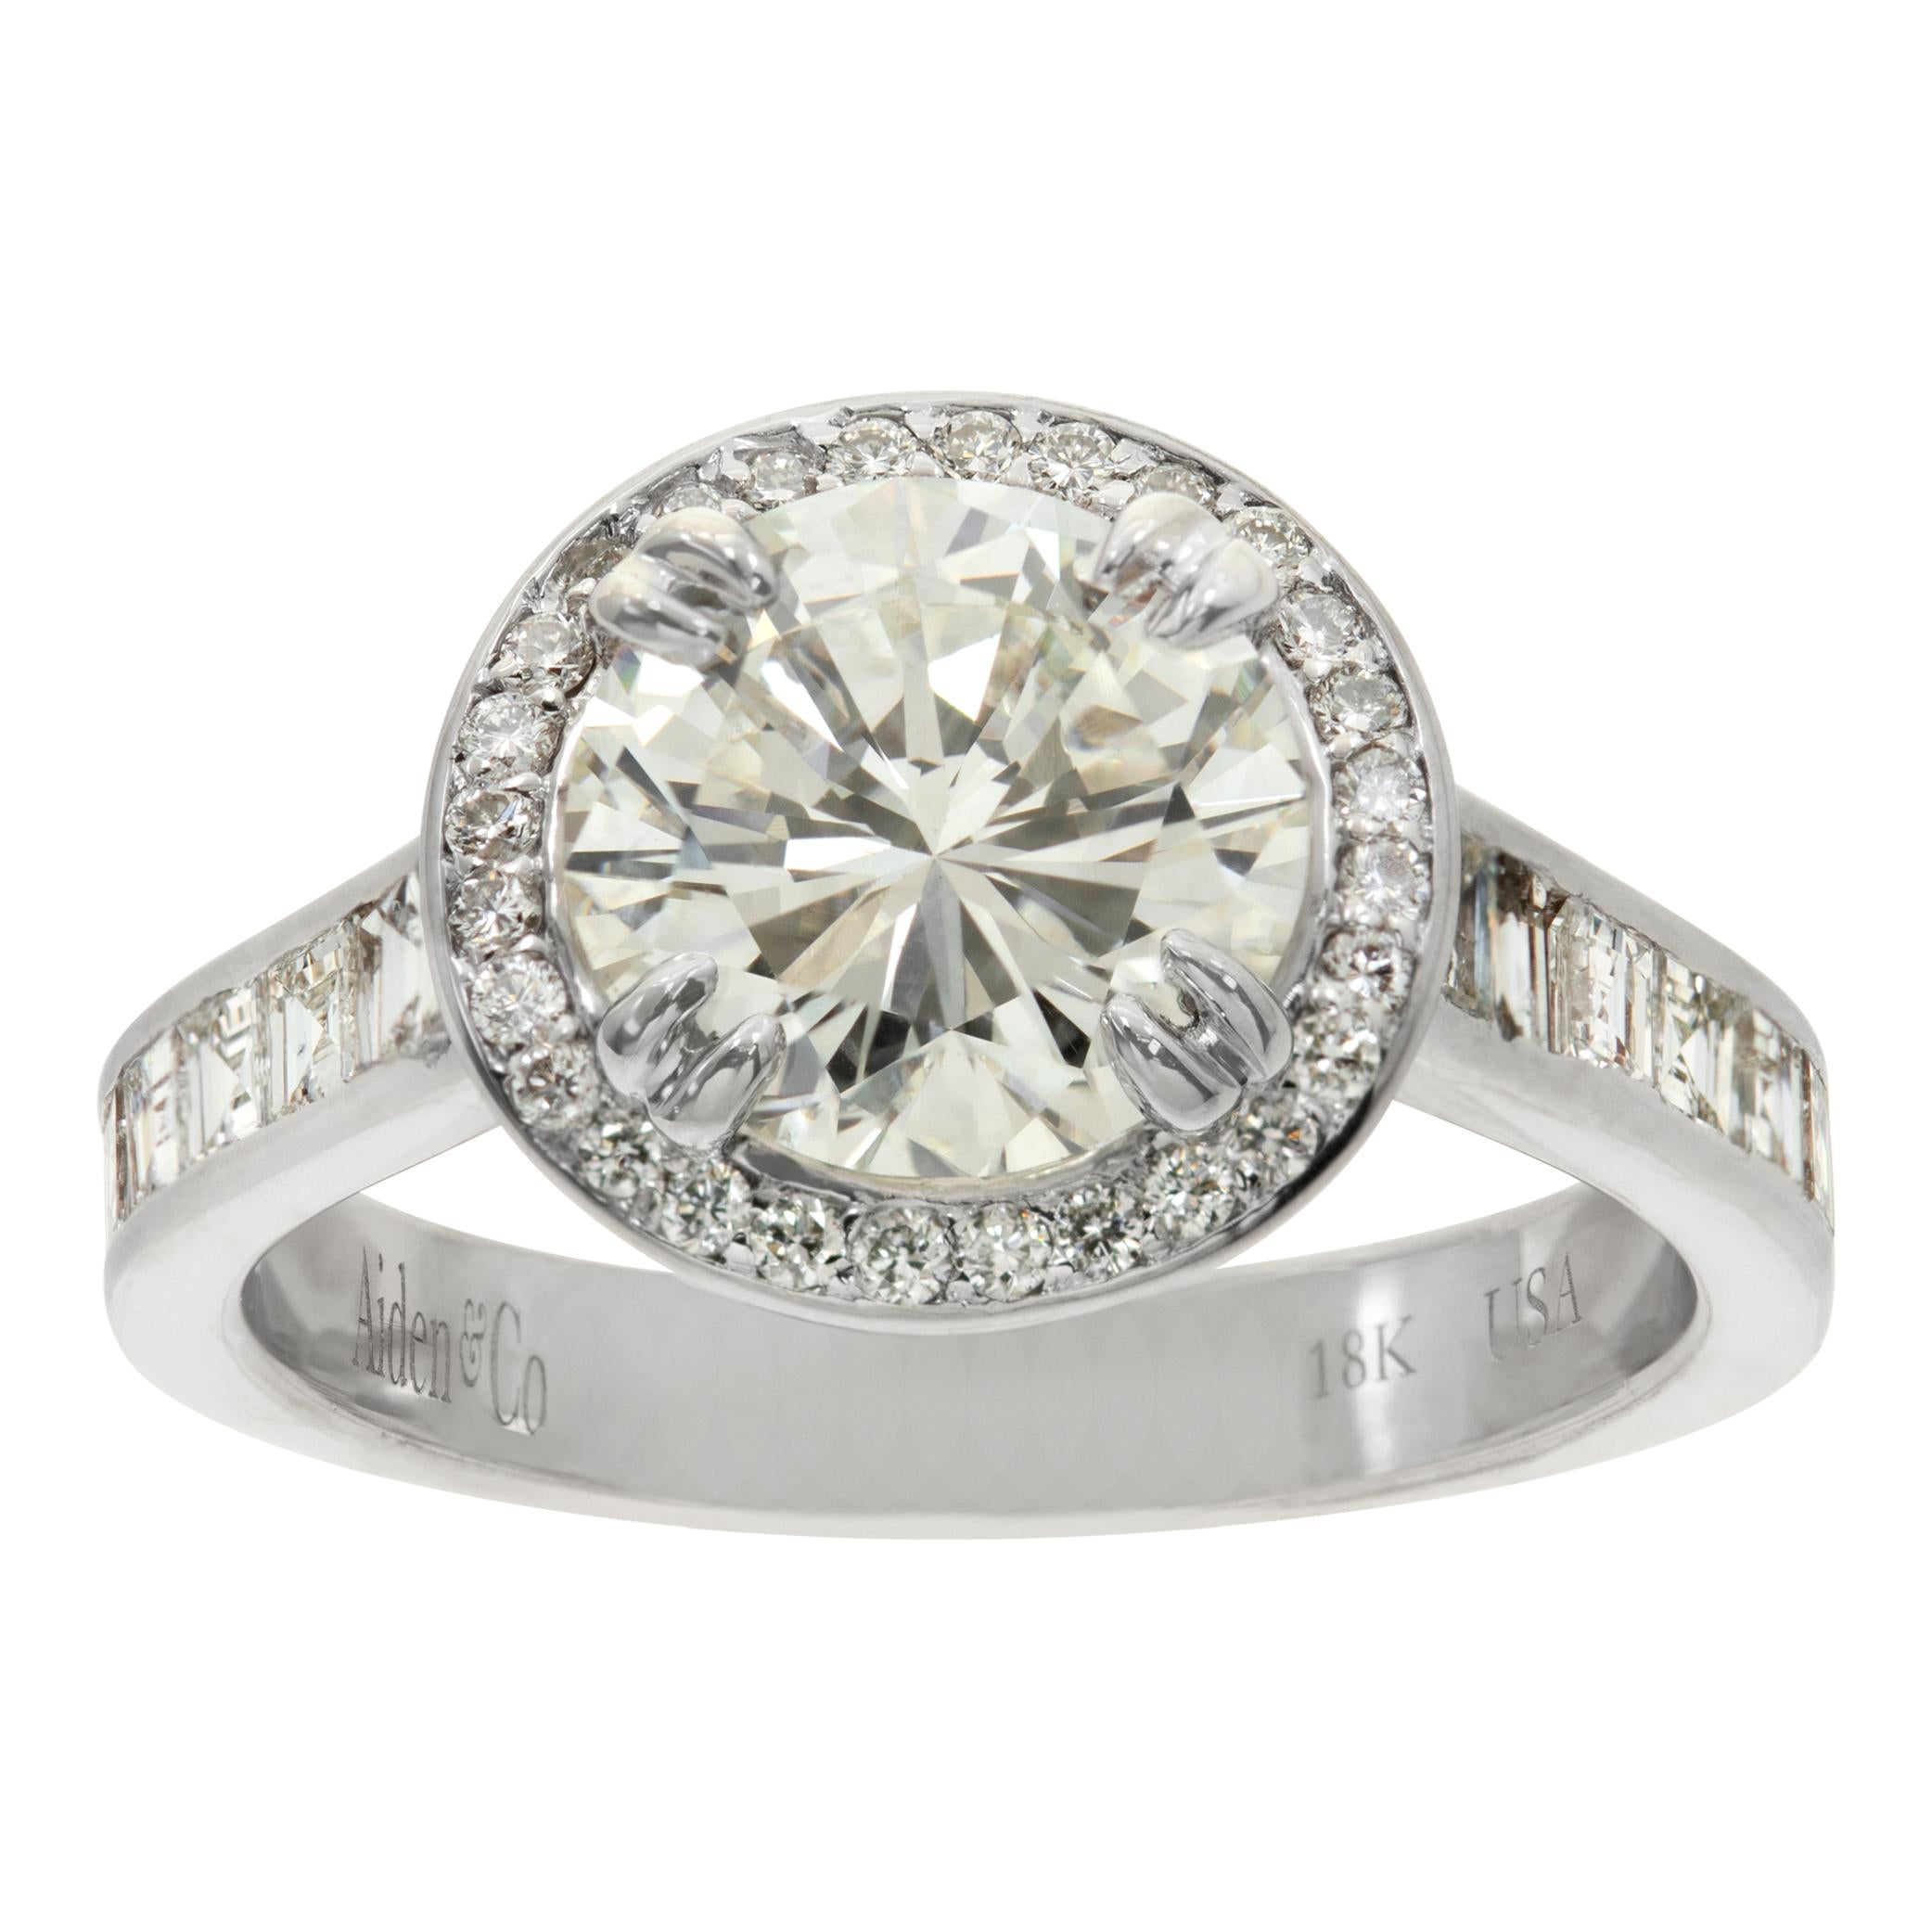 GIA certified diamond 18k White Gold ring